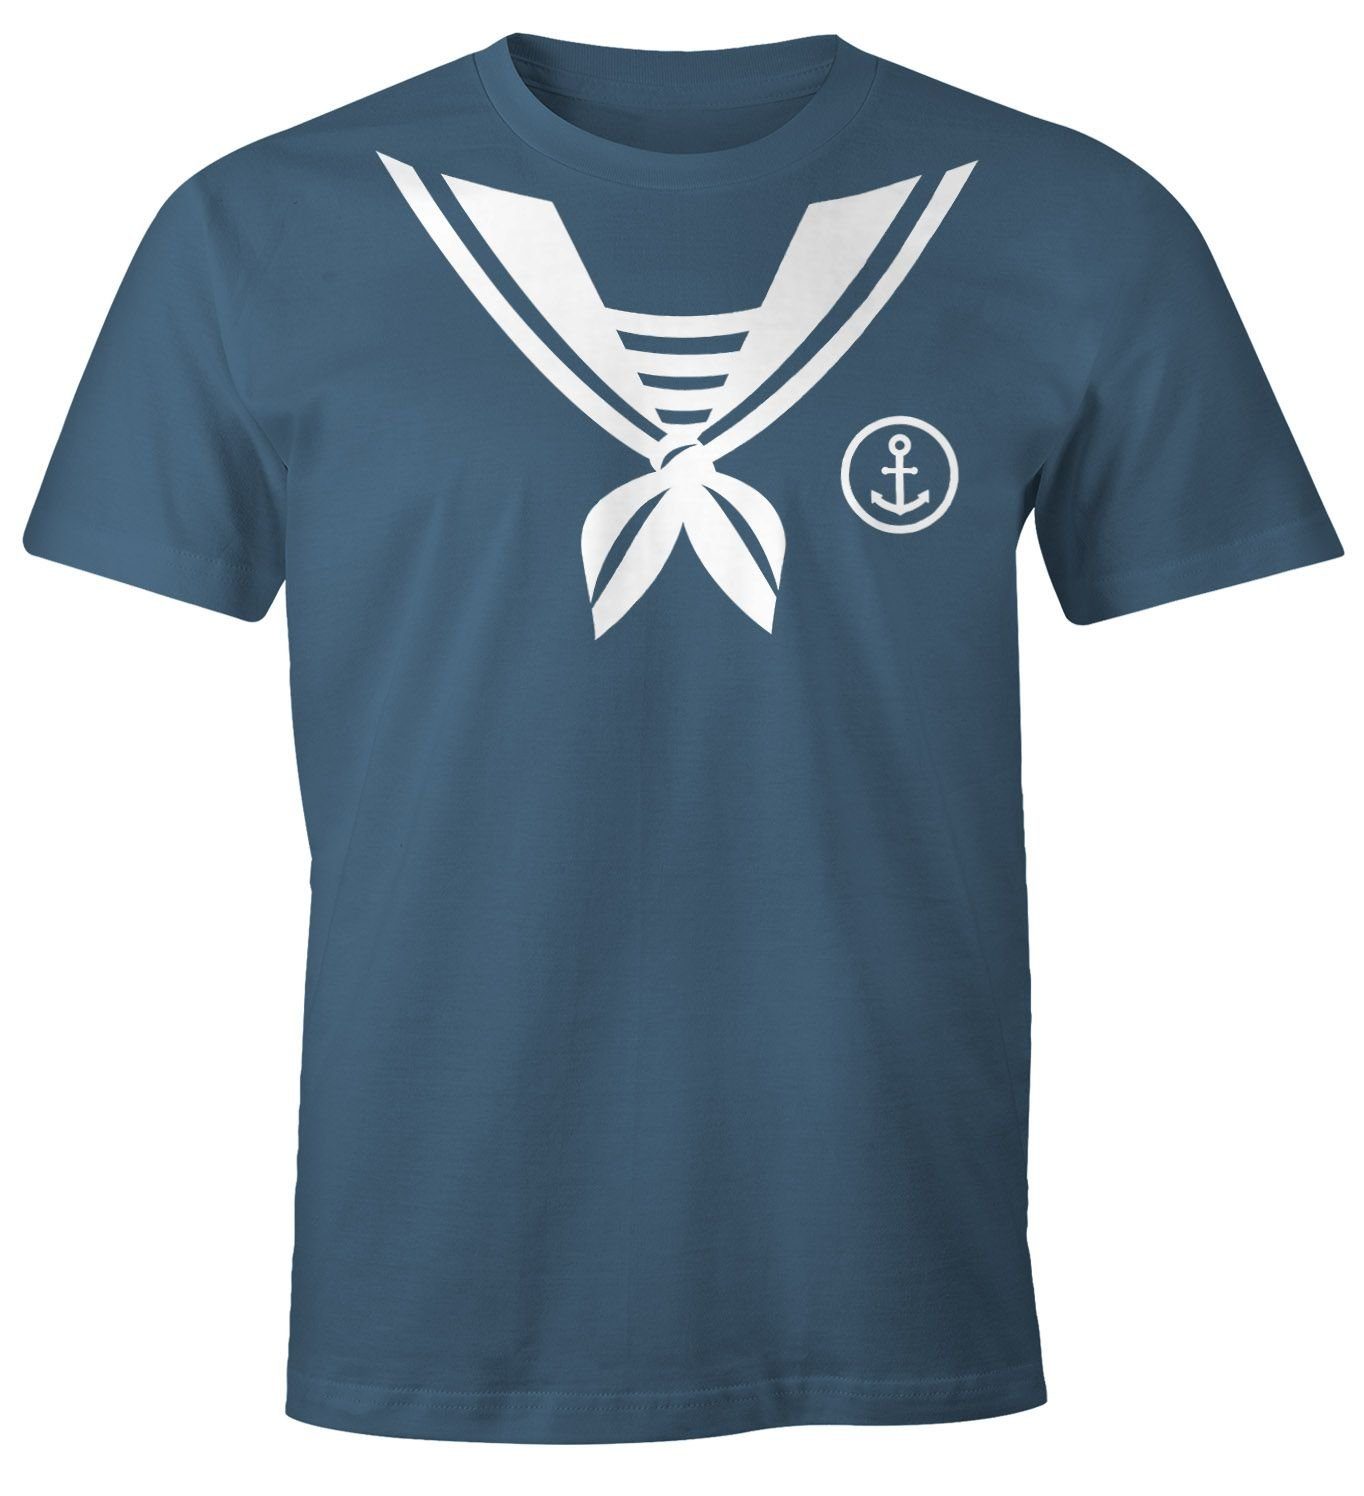 MoonWorks Print-Shirt Herren T-Shirt Matrose Sailor Fasching Fasching-Shirt Fun-Shirt Karneval Fastnacht Moonworks® mit Print blau